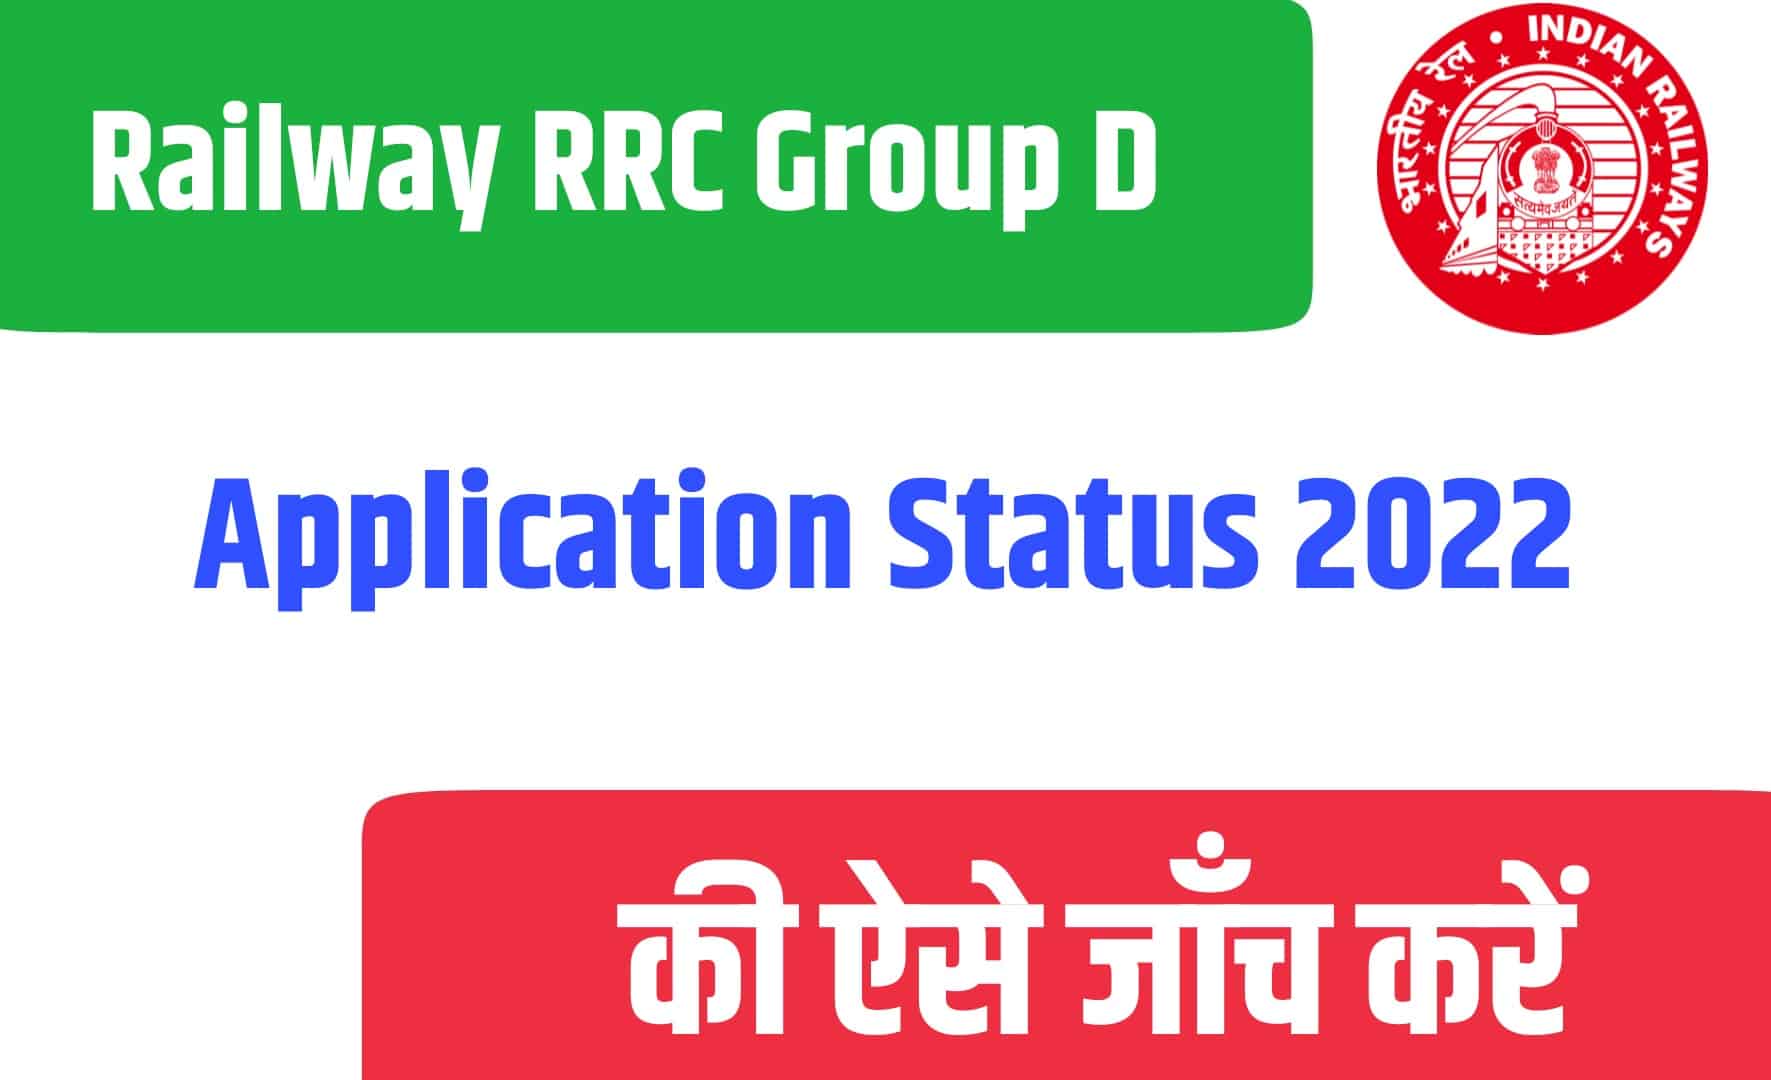 Railway RRC Group D Application Status 2022